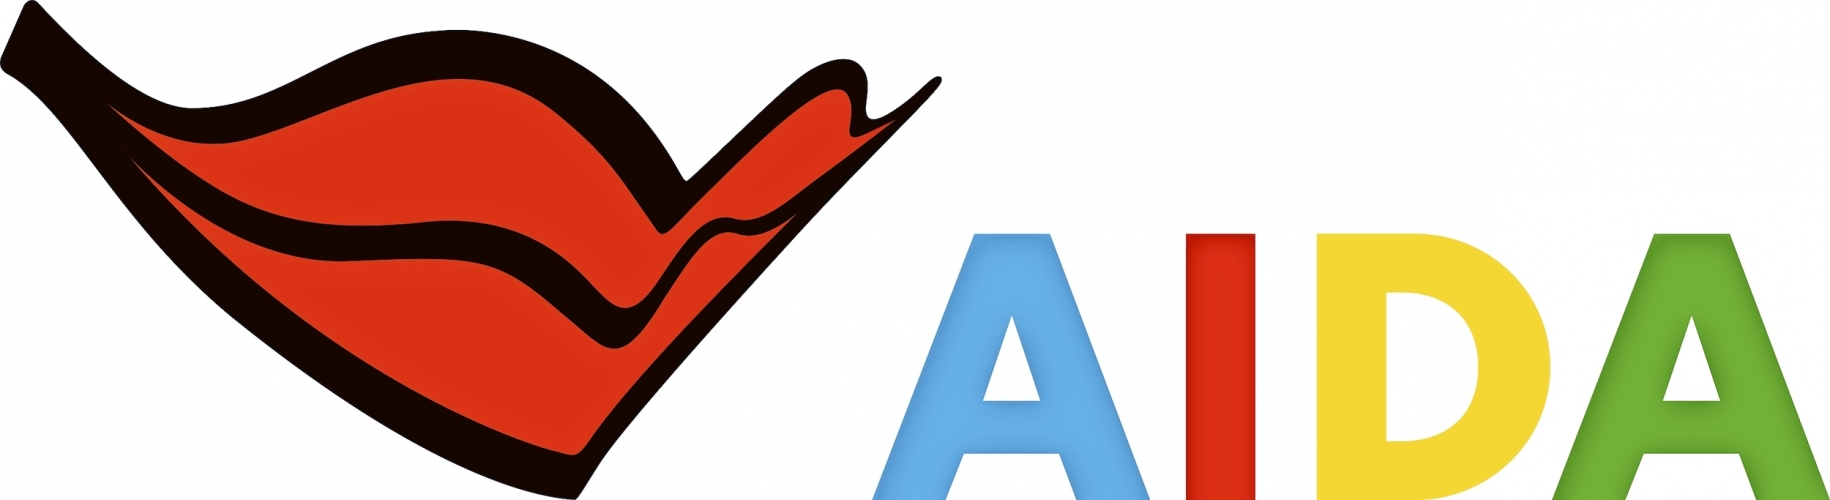 AIDAblu Logo